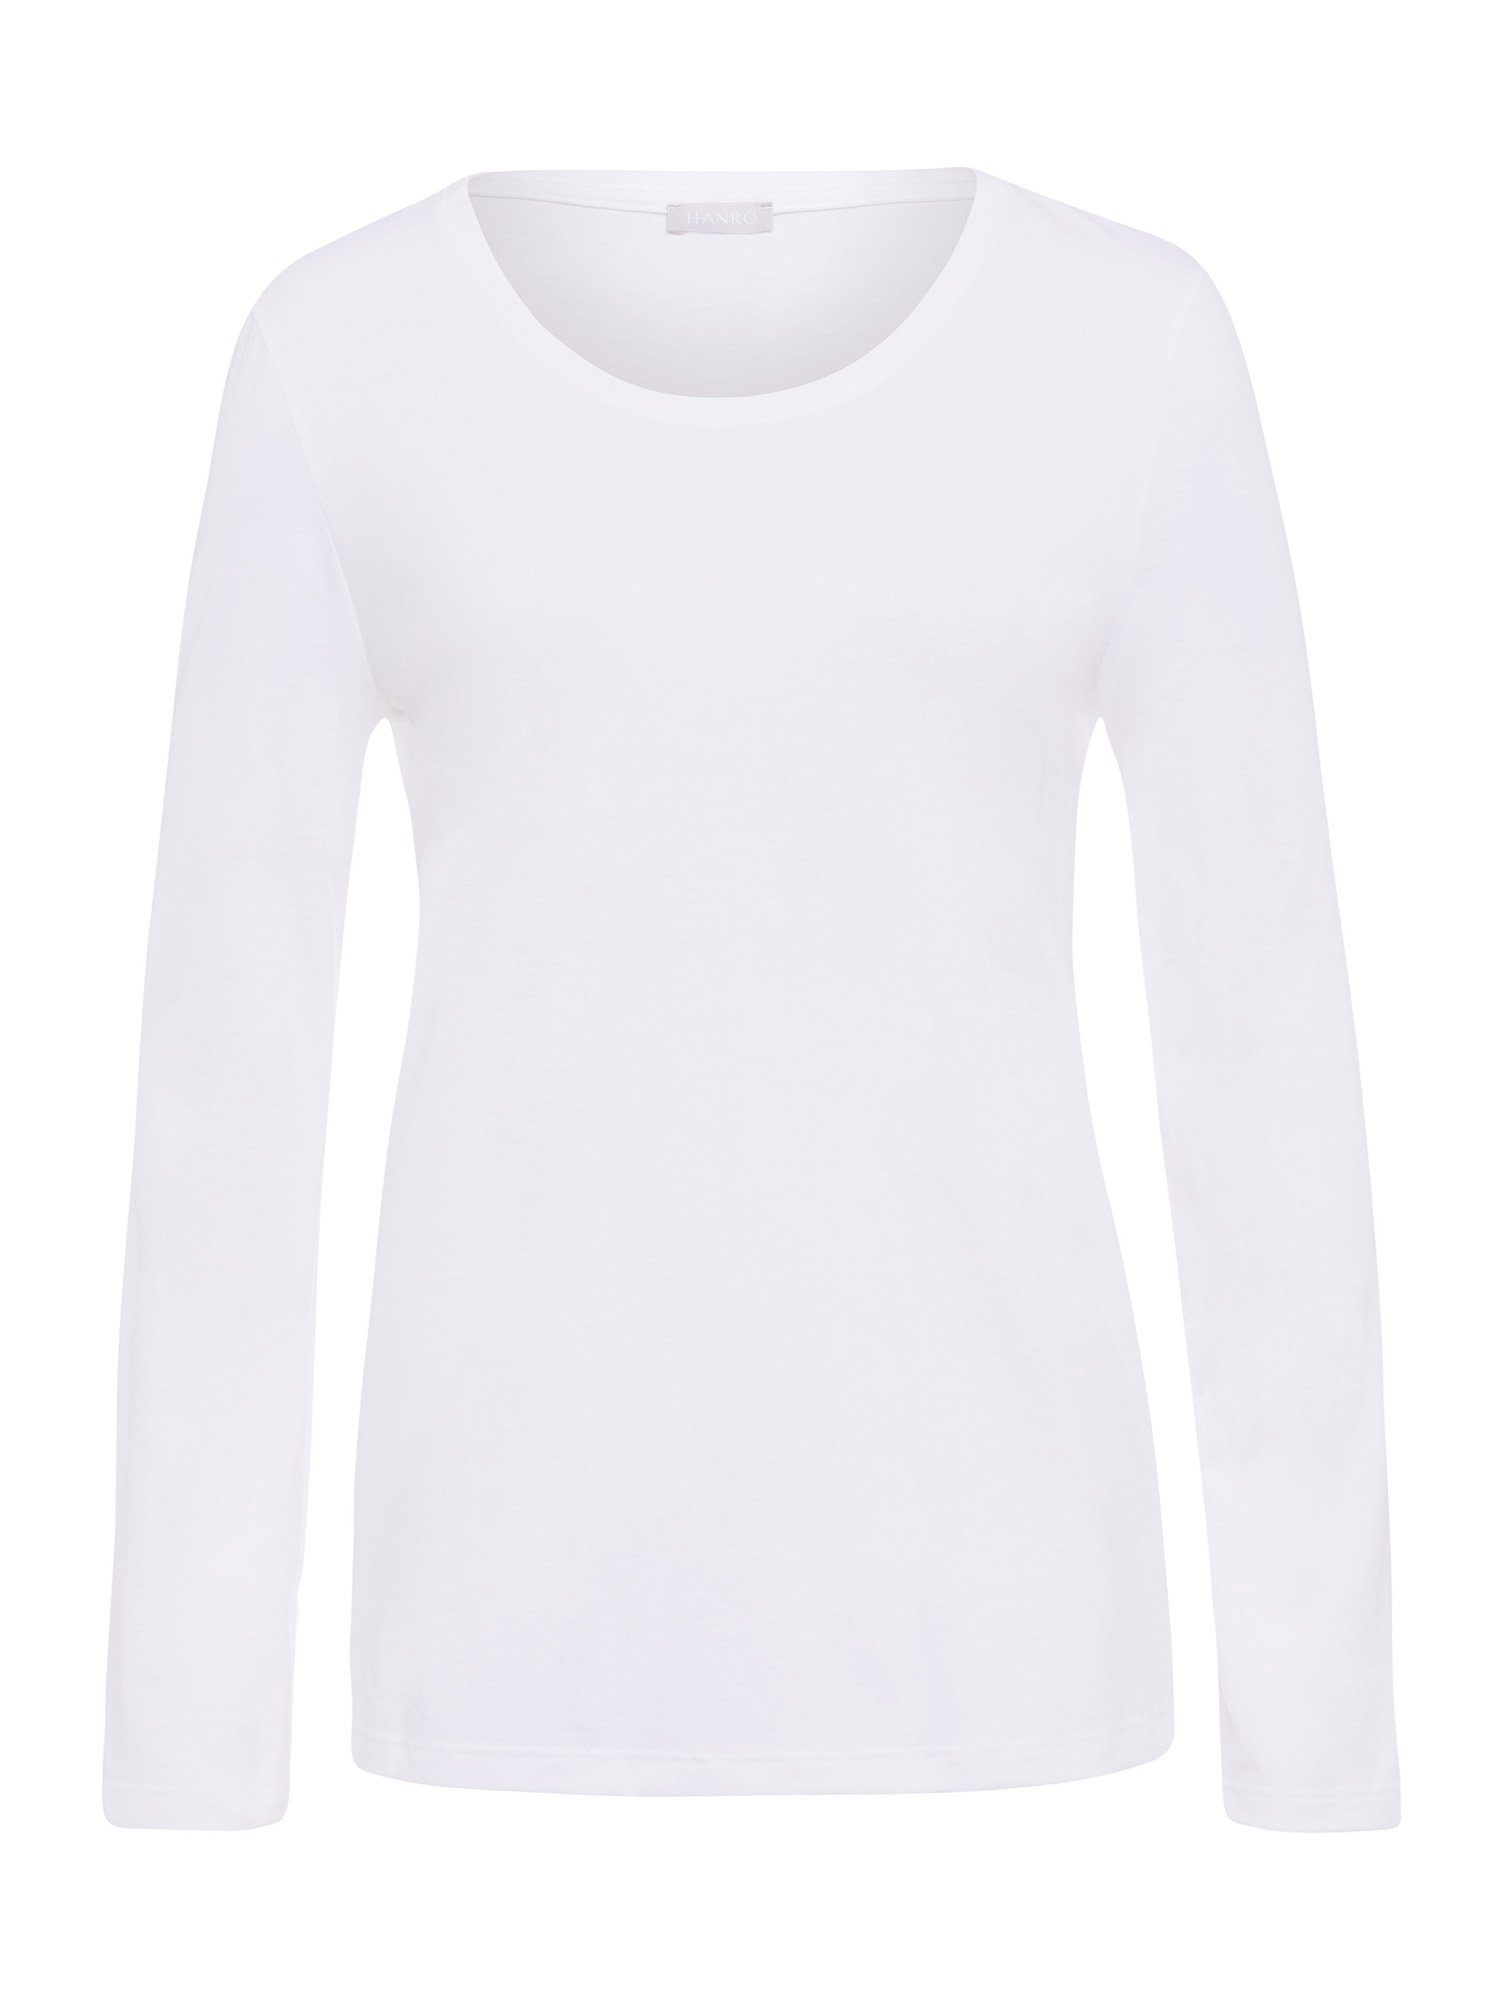 Hanro Pyjamaoberteil Sleep & Lounge white unterhemd shirt langarm